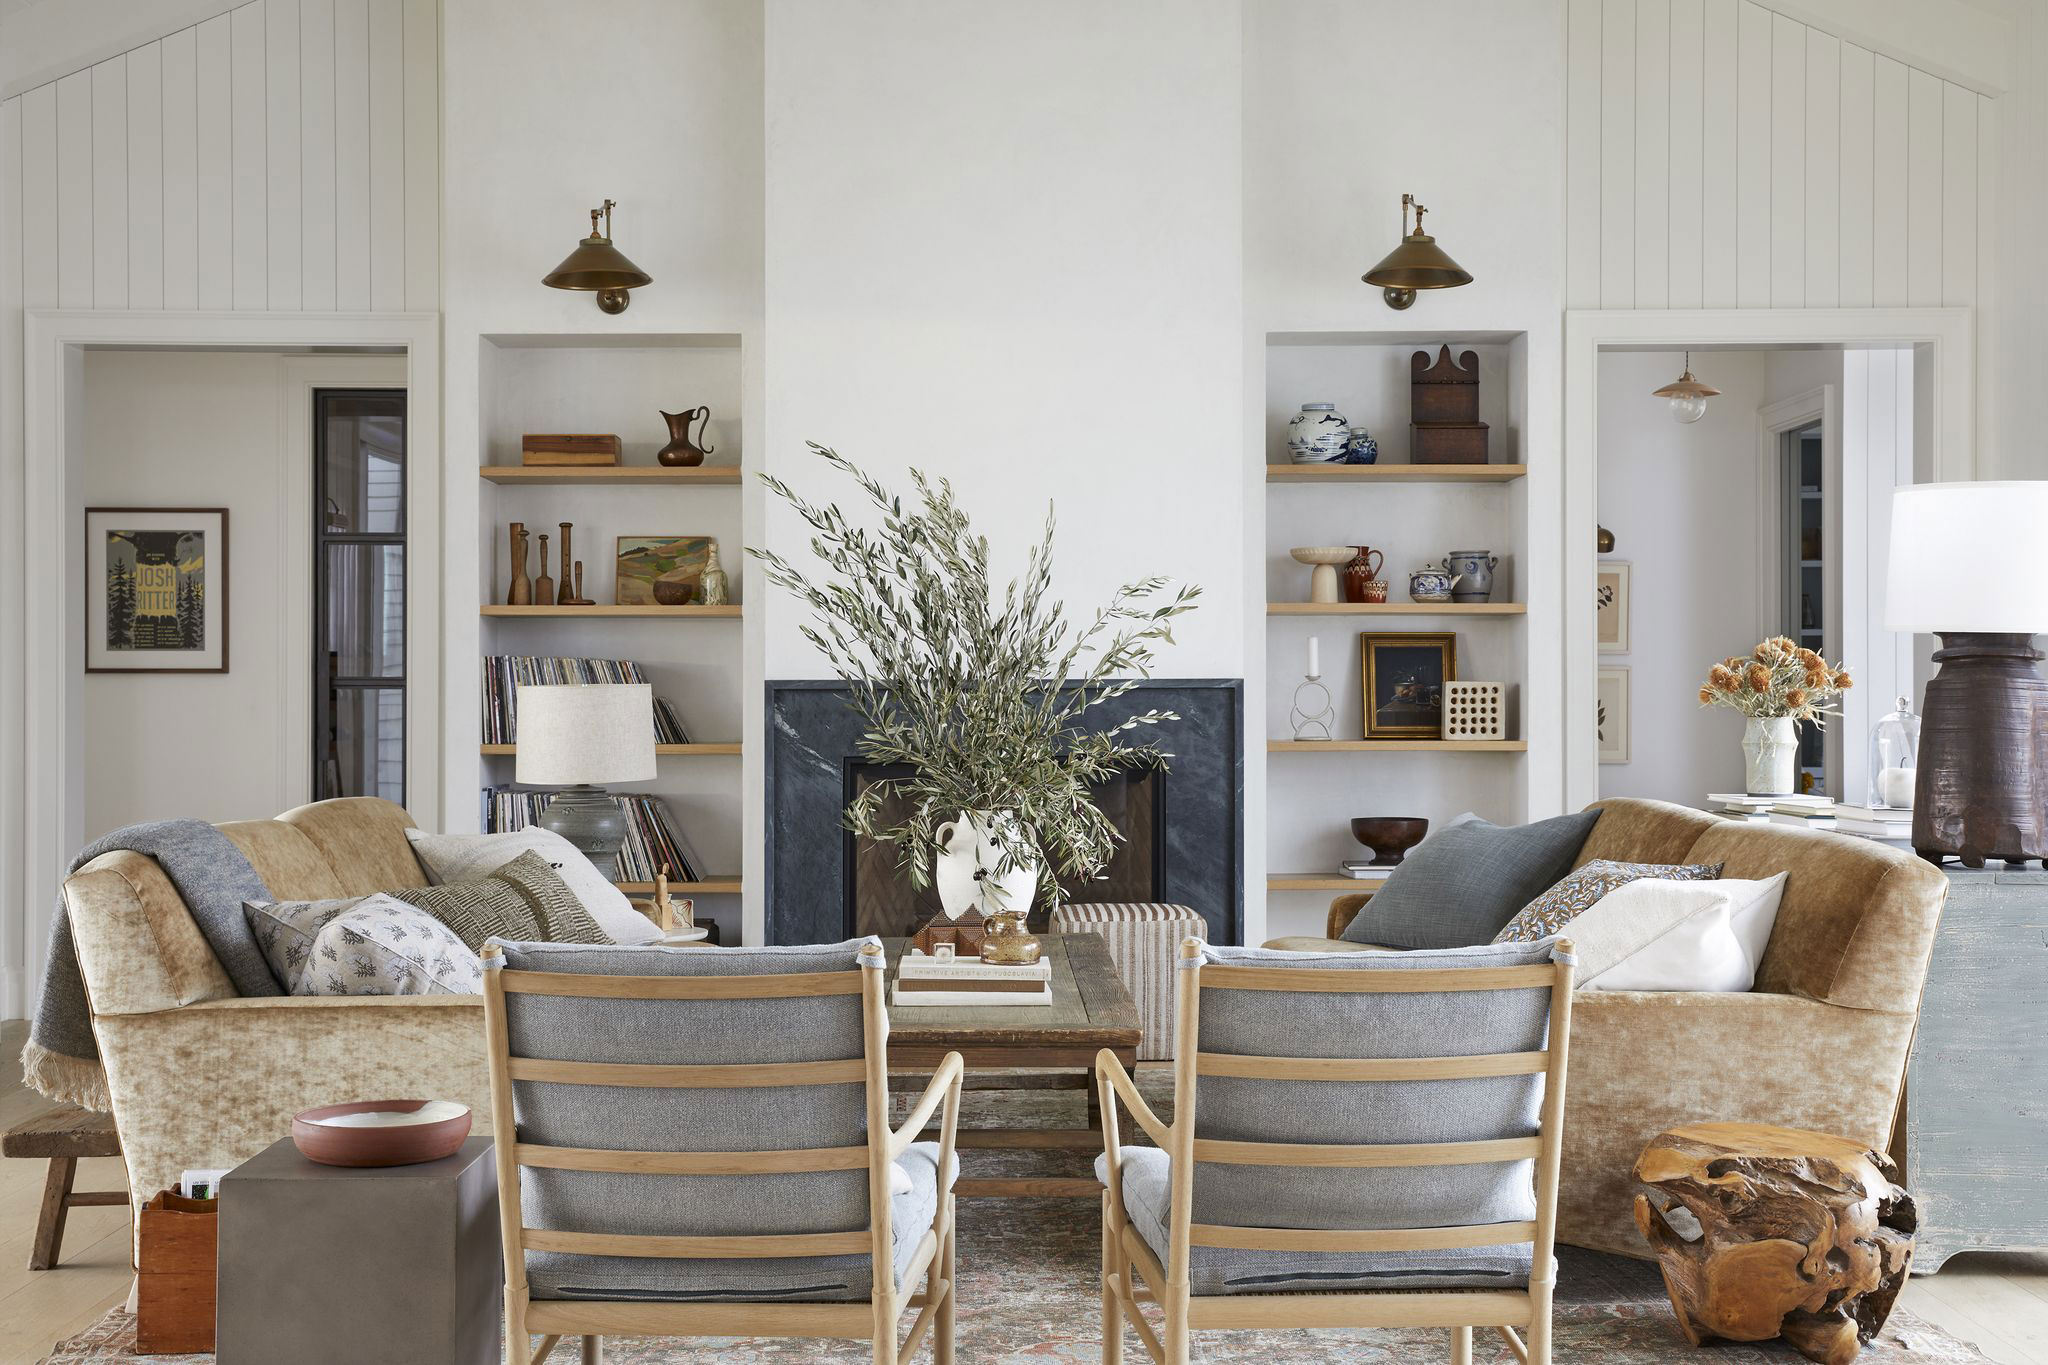 15 Farmhouse Living Room Ideas That Rival Joanna Gaines's Fixer Upper ...